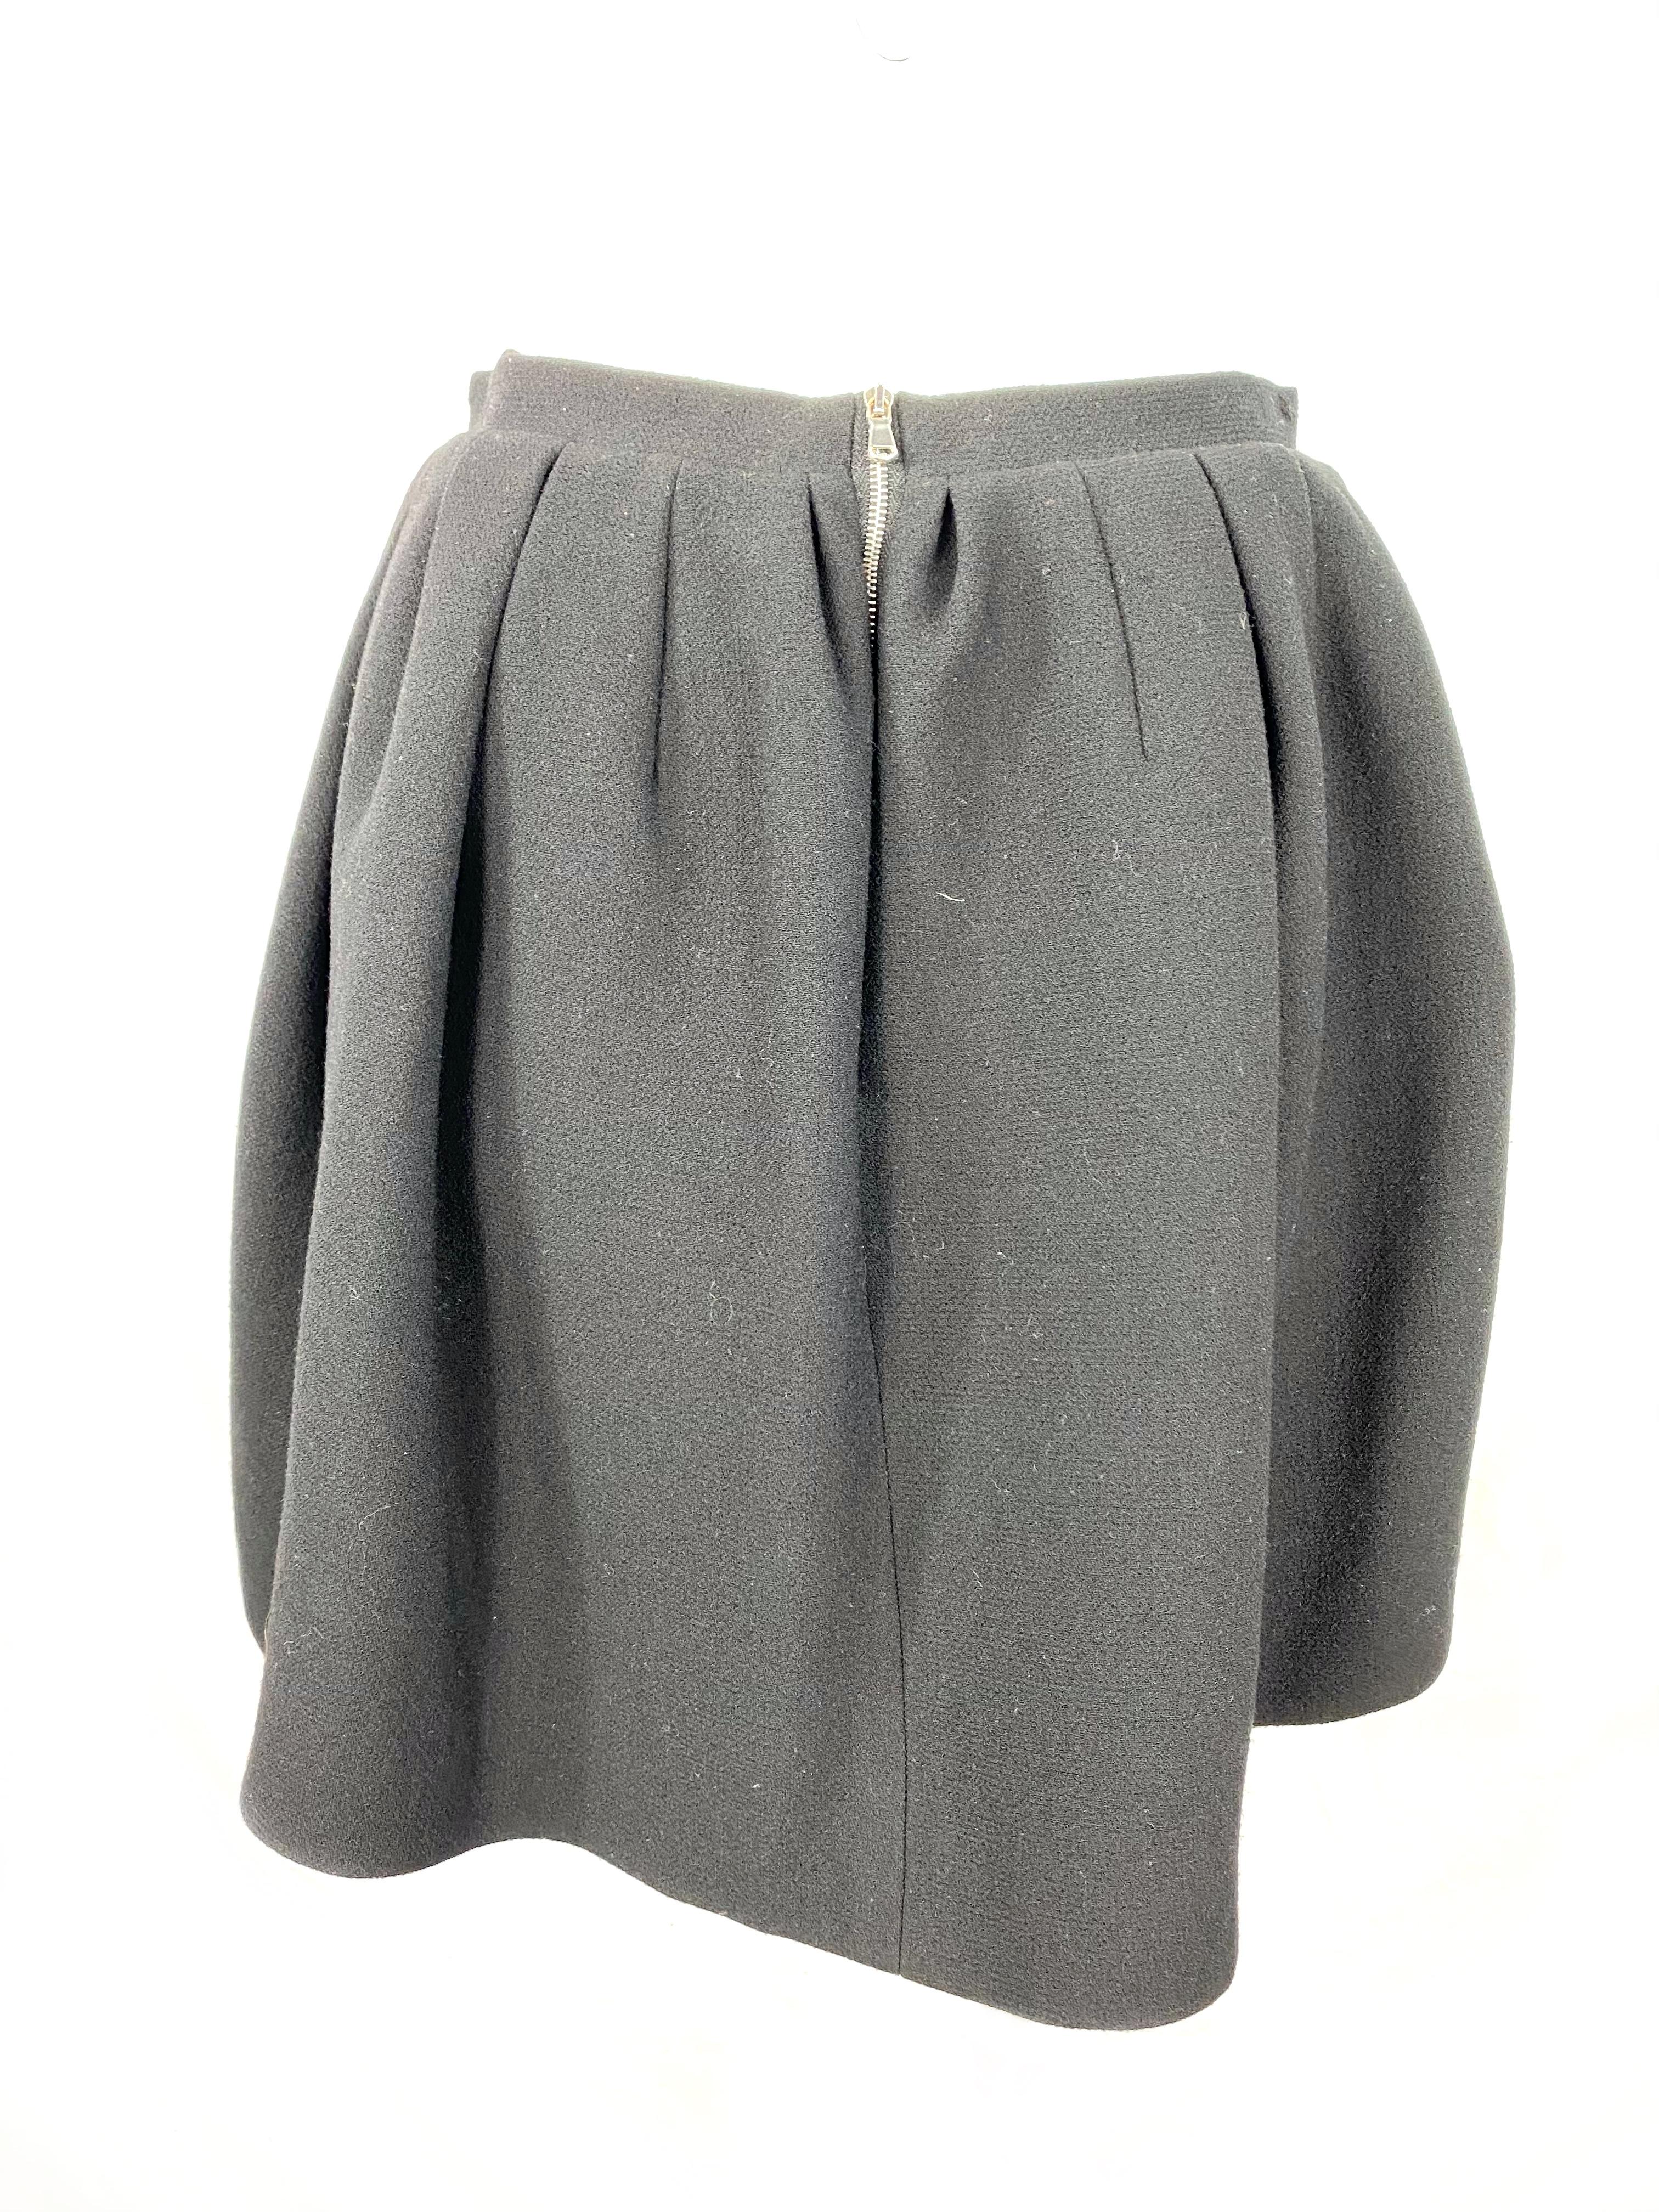 Carven Black Wool Blazer Jacket and Flare Mini Skirt Set, Size 38 For Sale 2